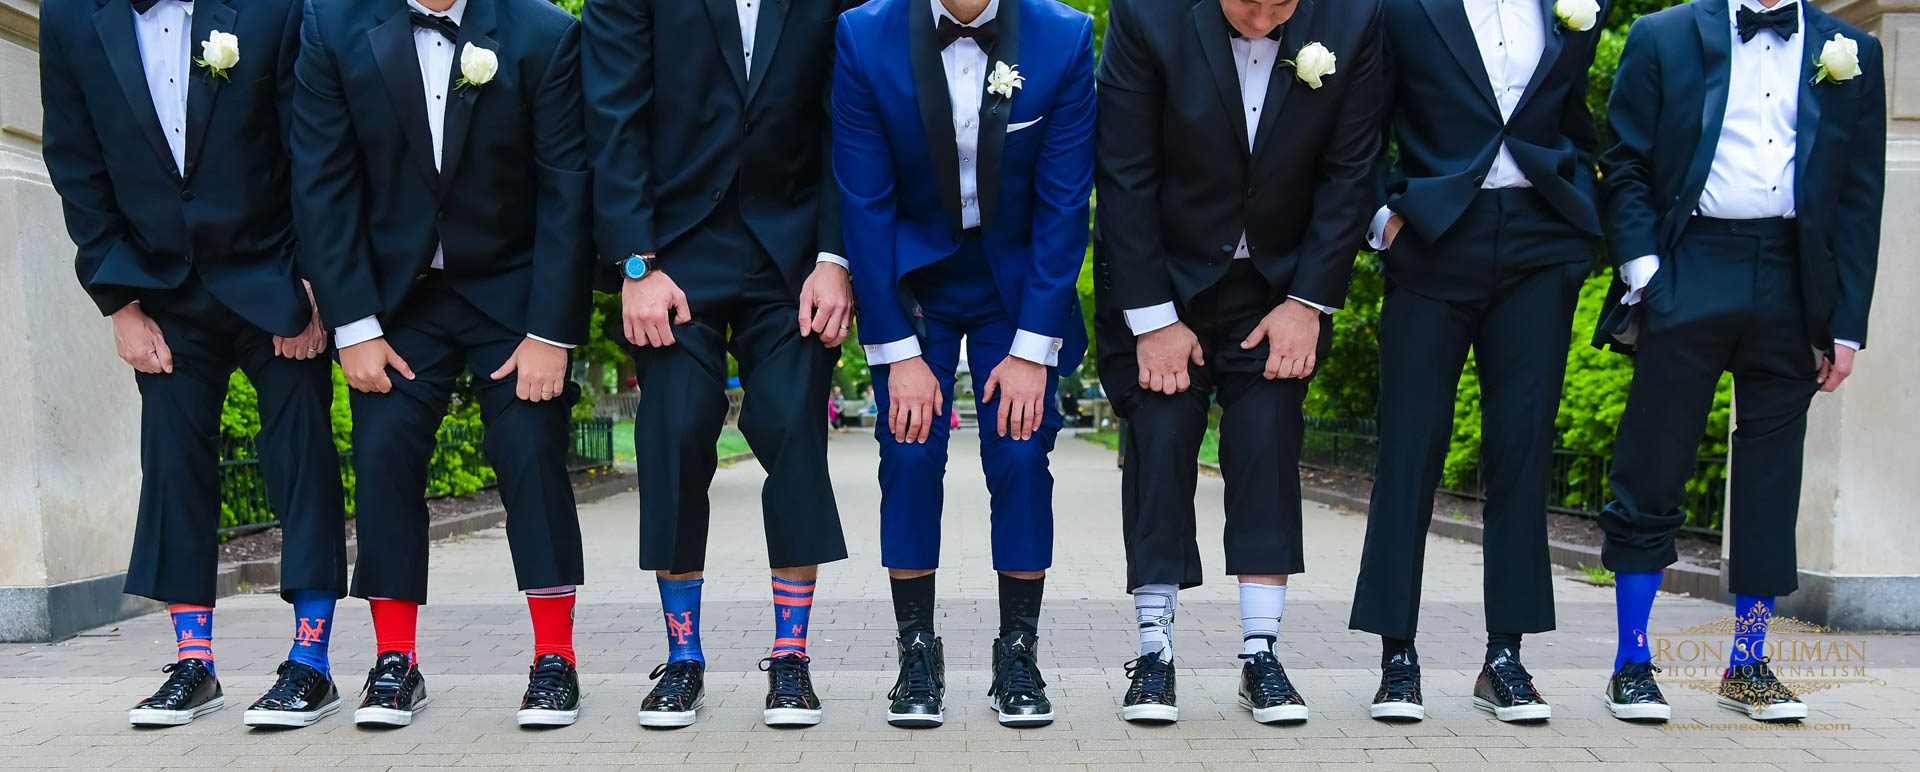 sports groomsman socks